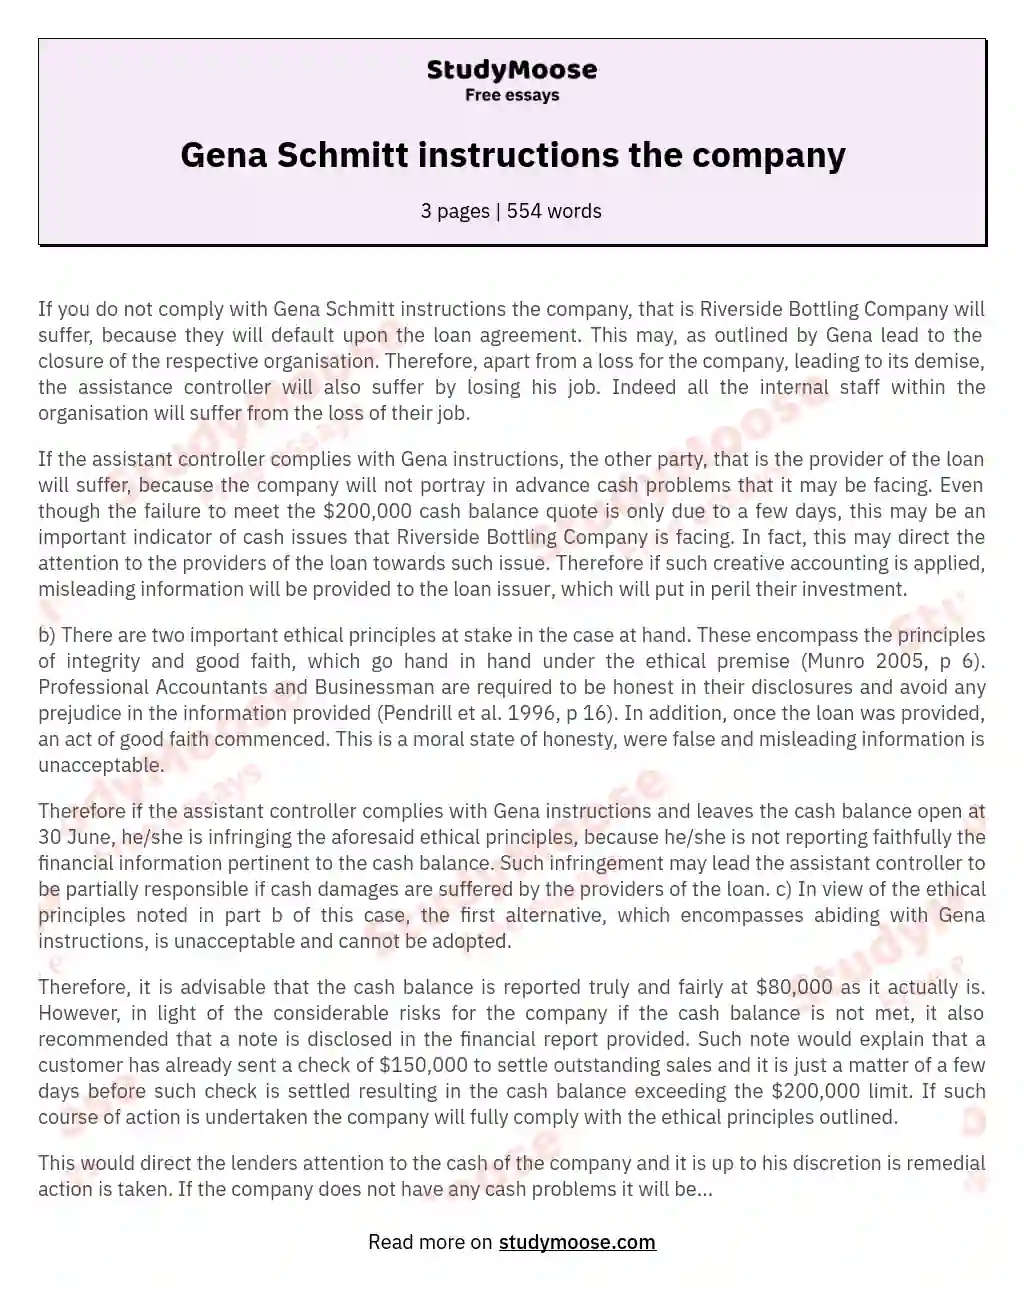 Gena Schmitt instructions the company essay